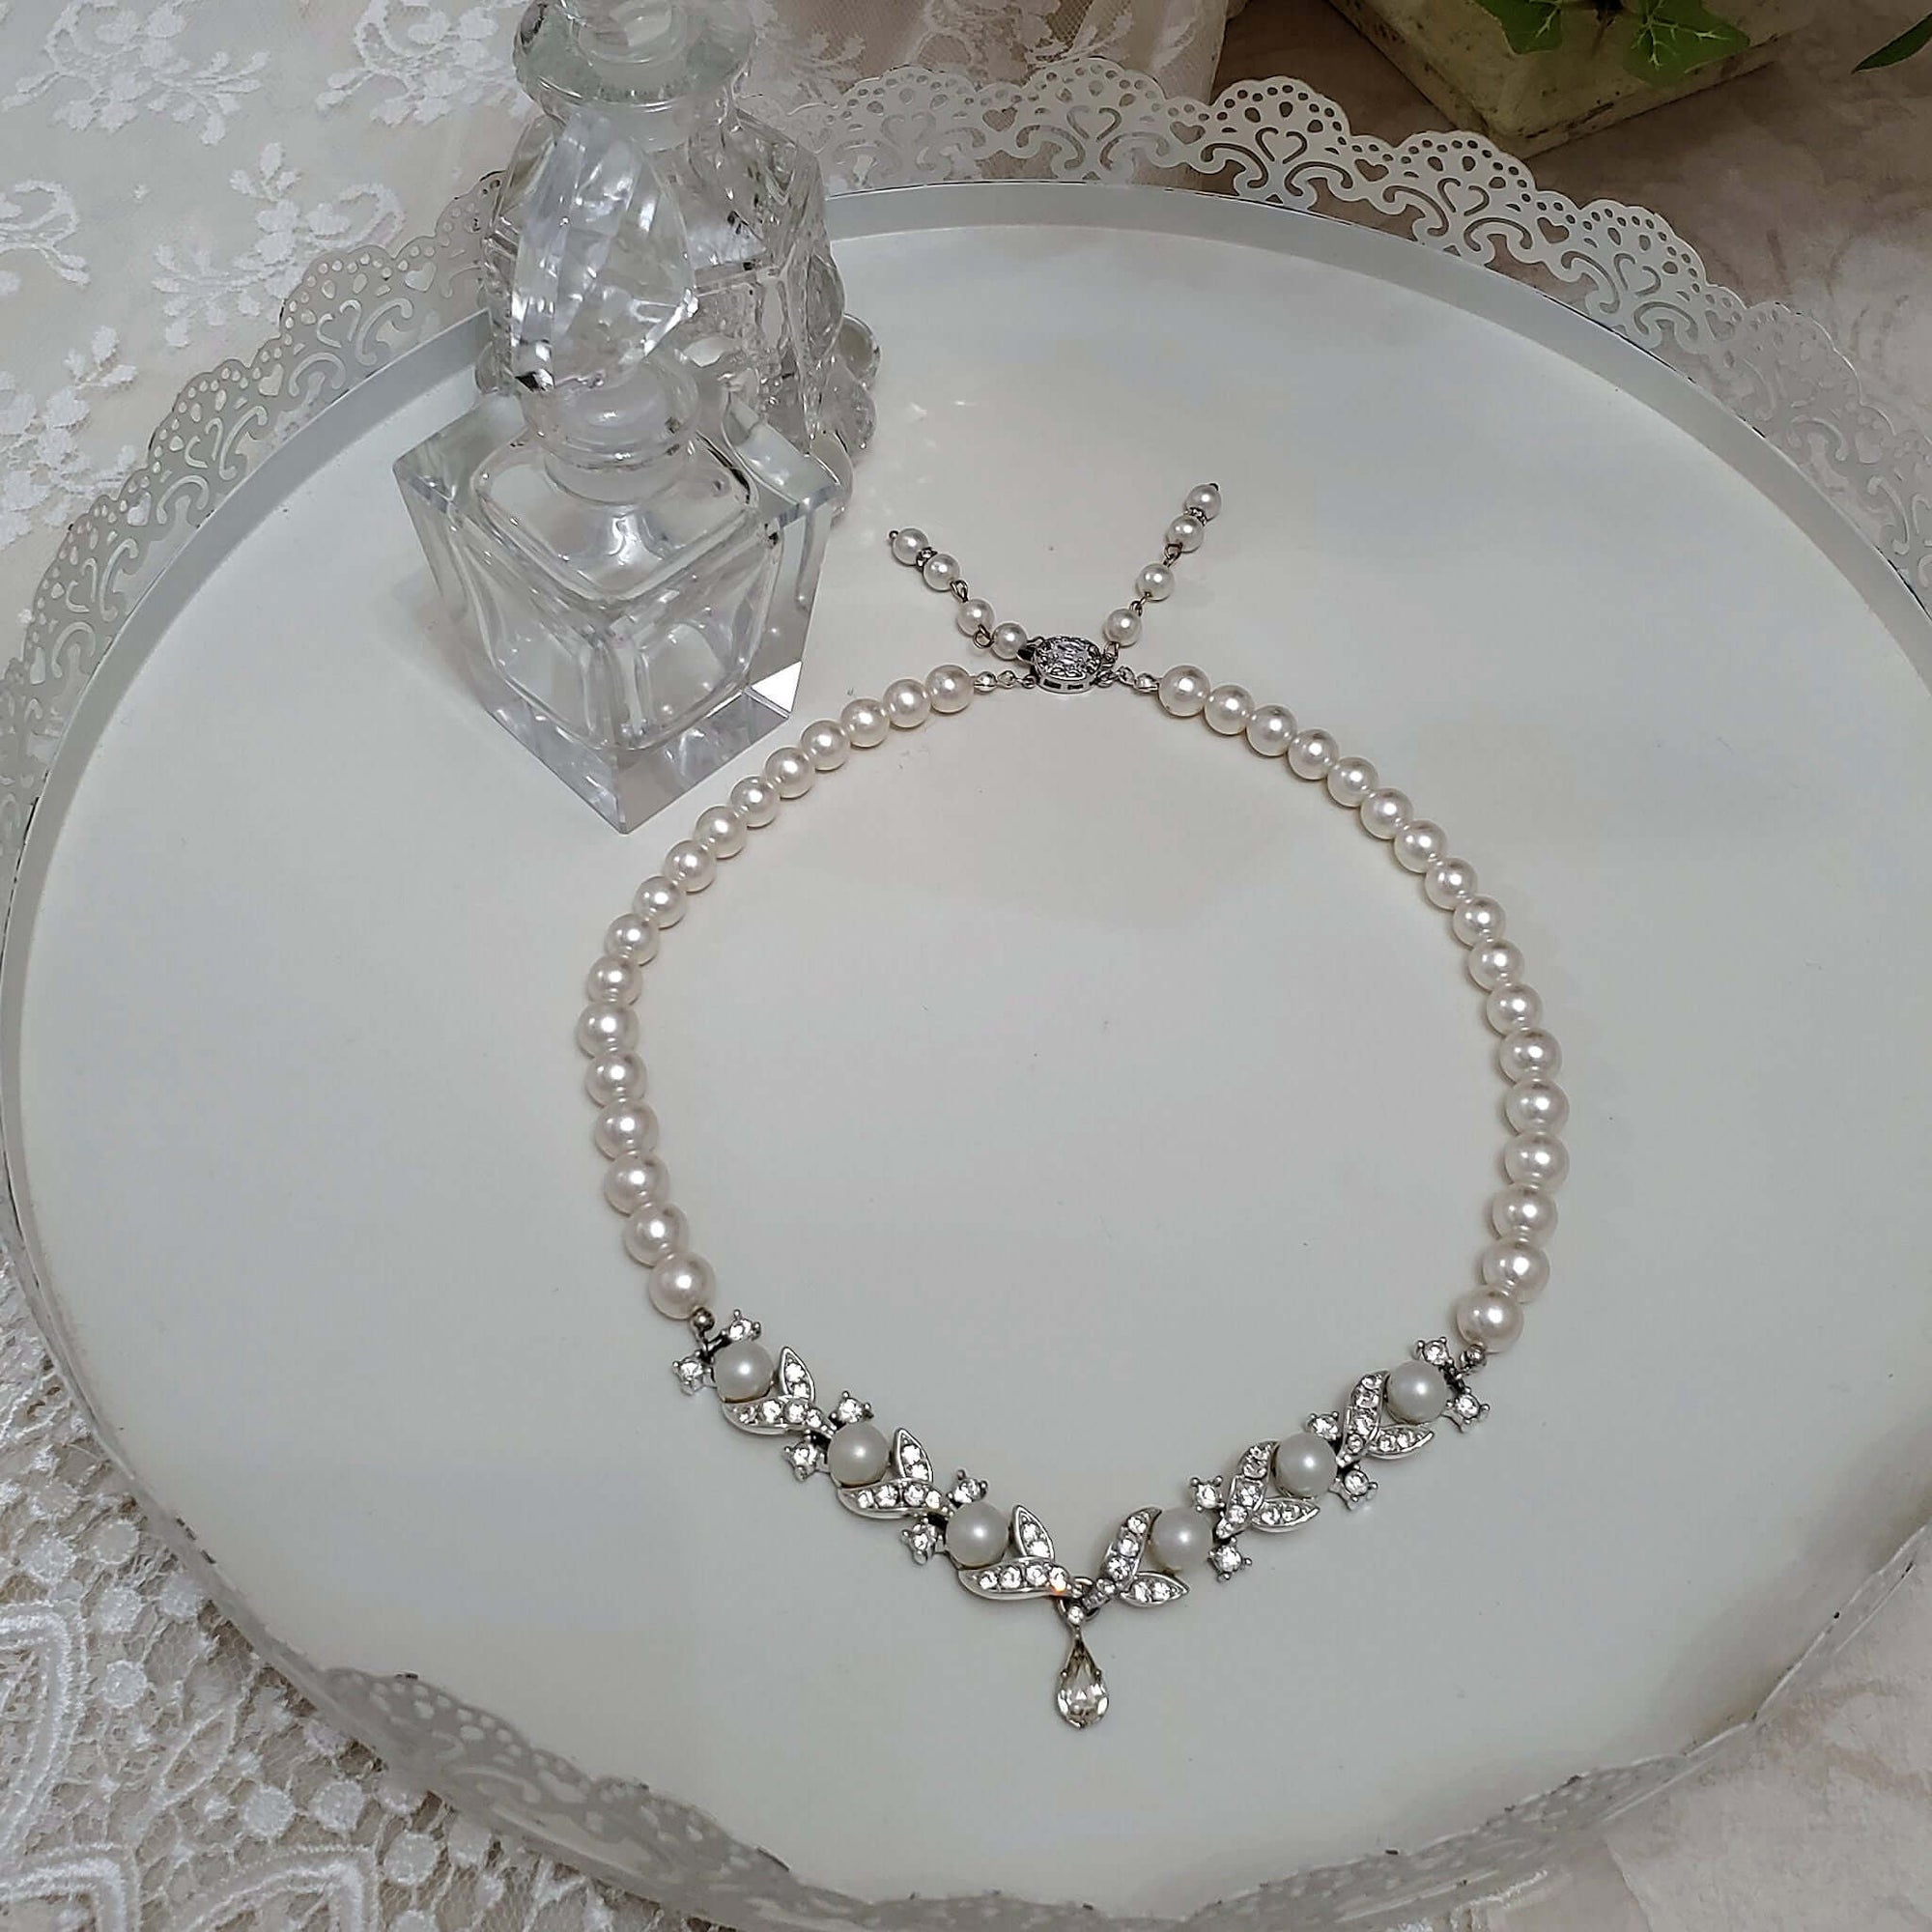 Reimagined Vintage Pearl Necklace